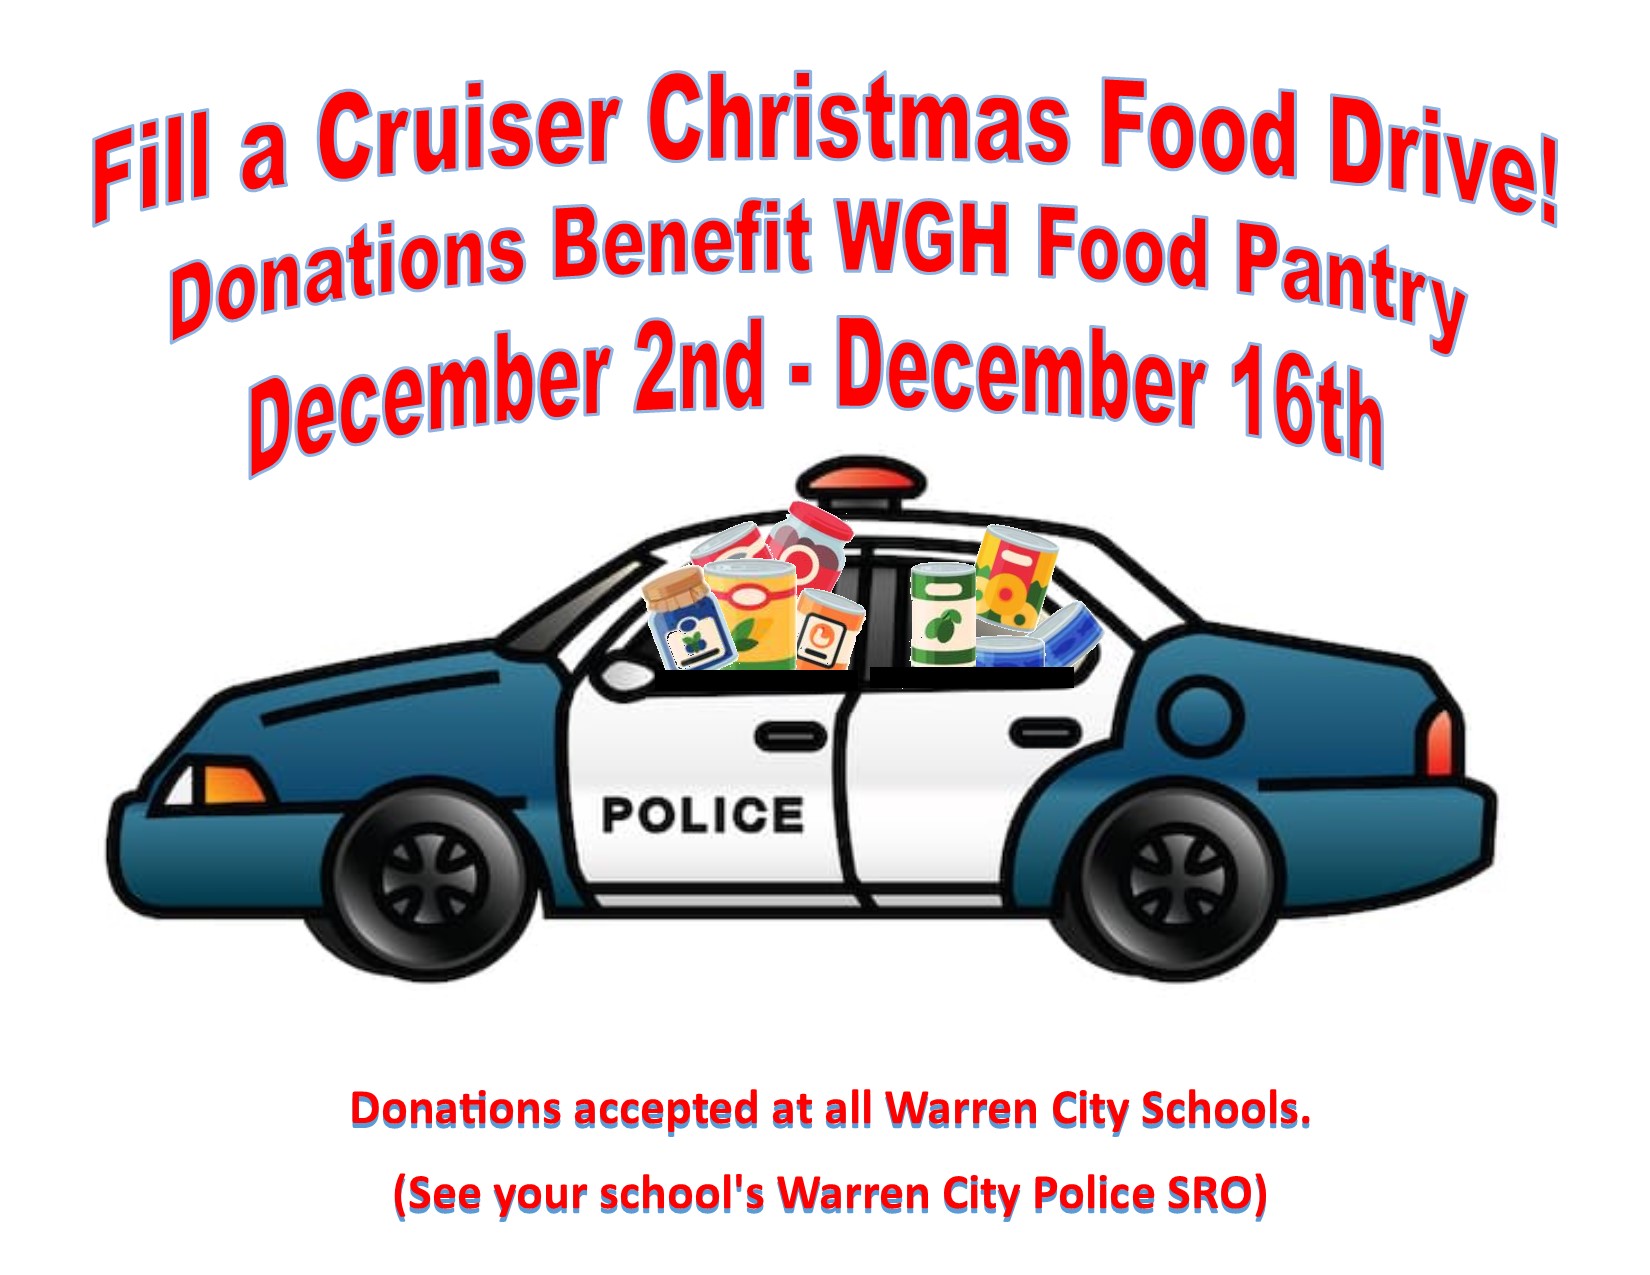 Fill a Cruiser Holiday Food Drive!